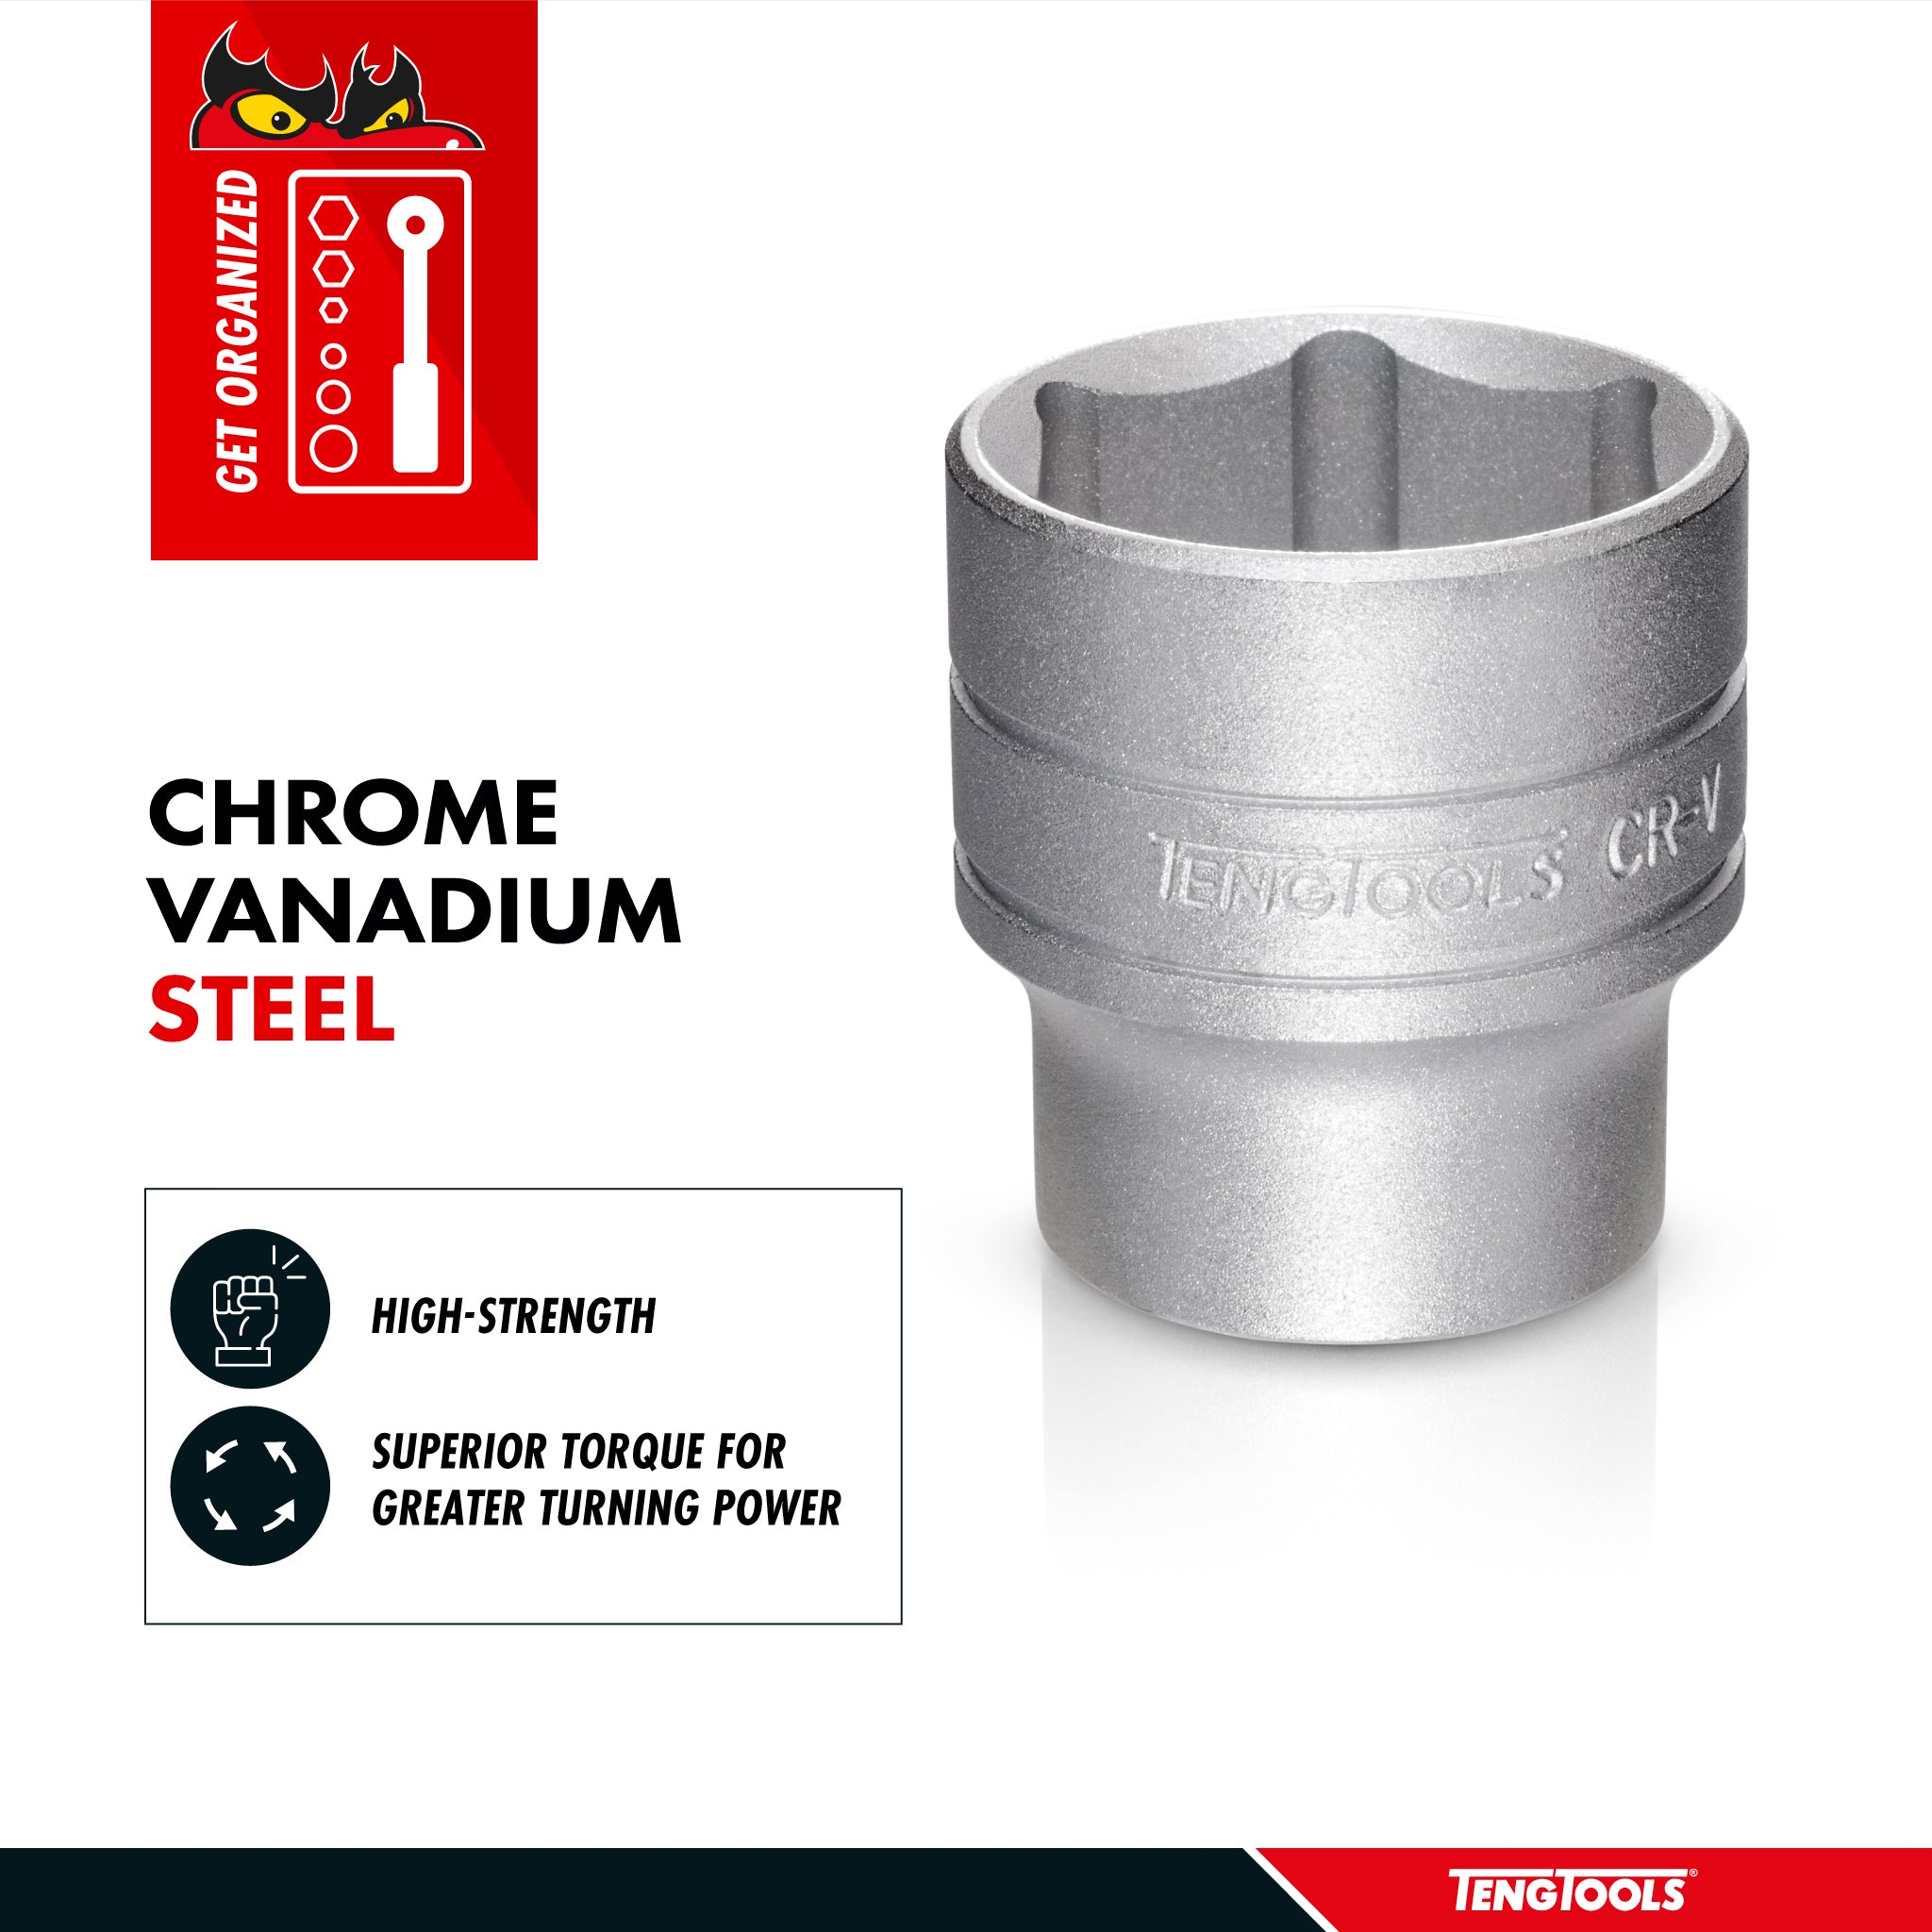 Teng Tools 1/2 Inch Drive 6 Point Metric Shallow Chrome Vanadium Sockets - 11mm